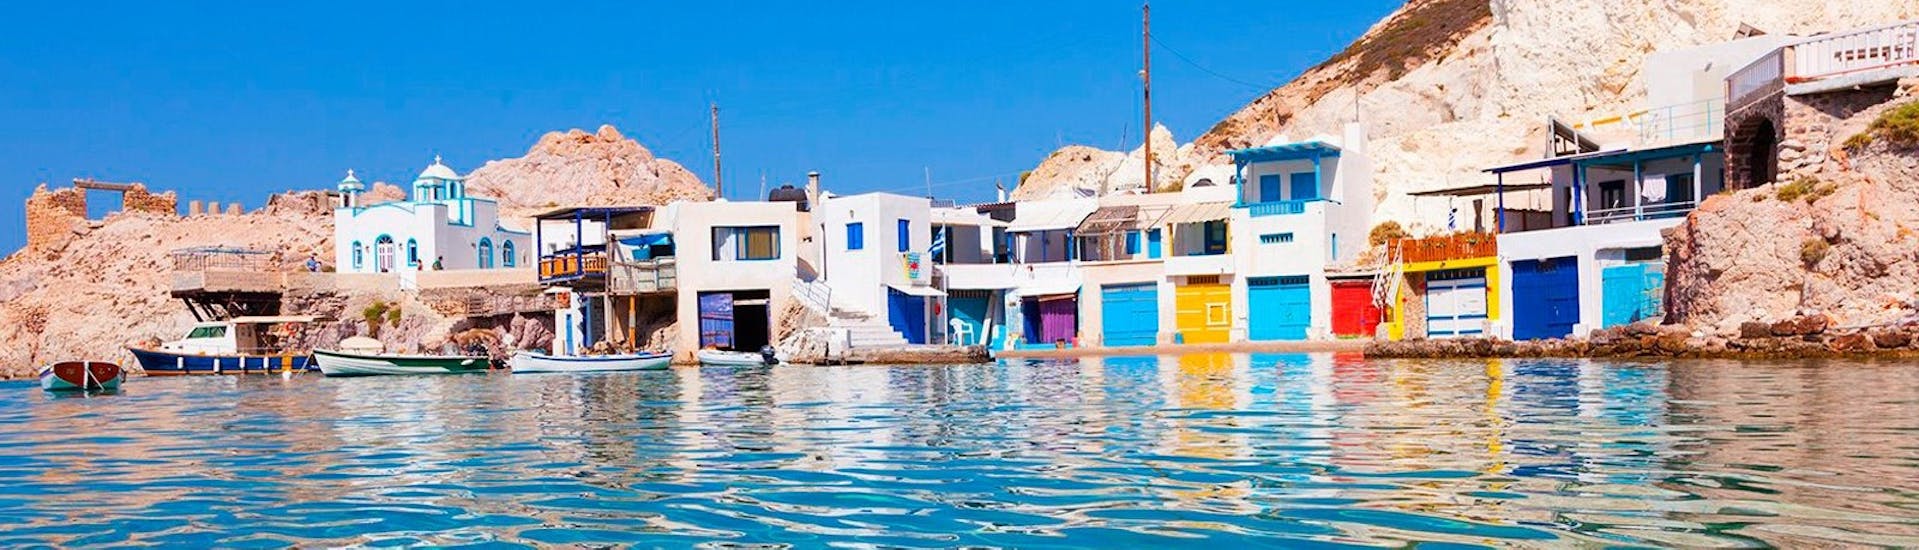 The colorful village of Klima, where the statue of Venus de Milo was discovered, in the private luxury yacht trip to Folegandros, Sikinos, Polyaigos & Kimolos with Indigo Yacht Milos.